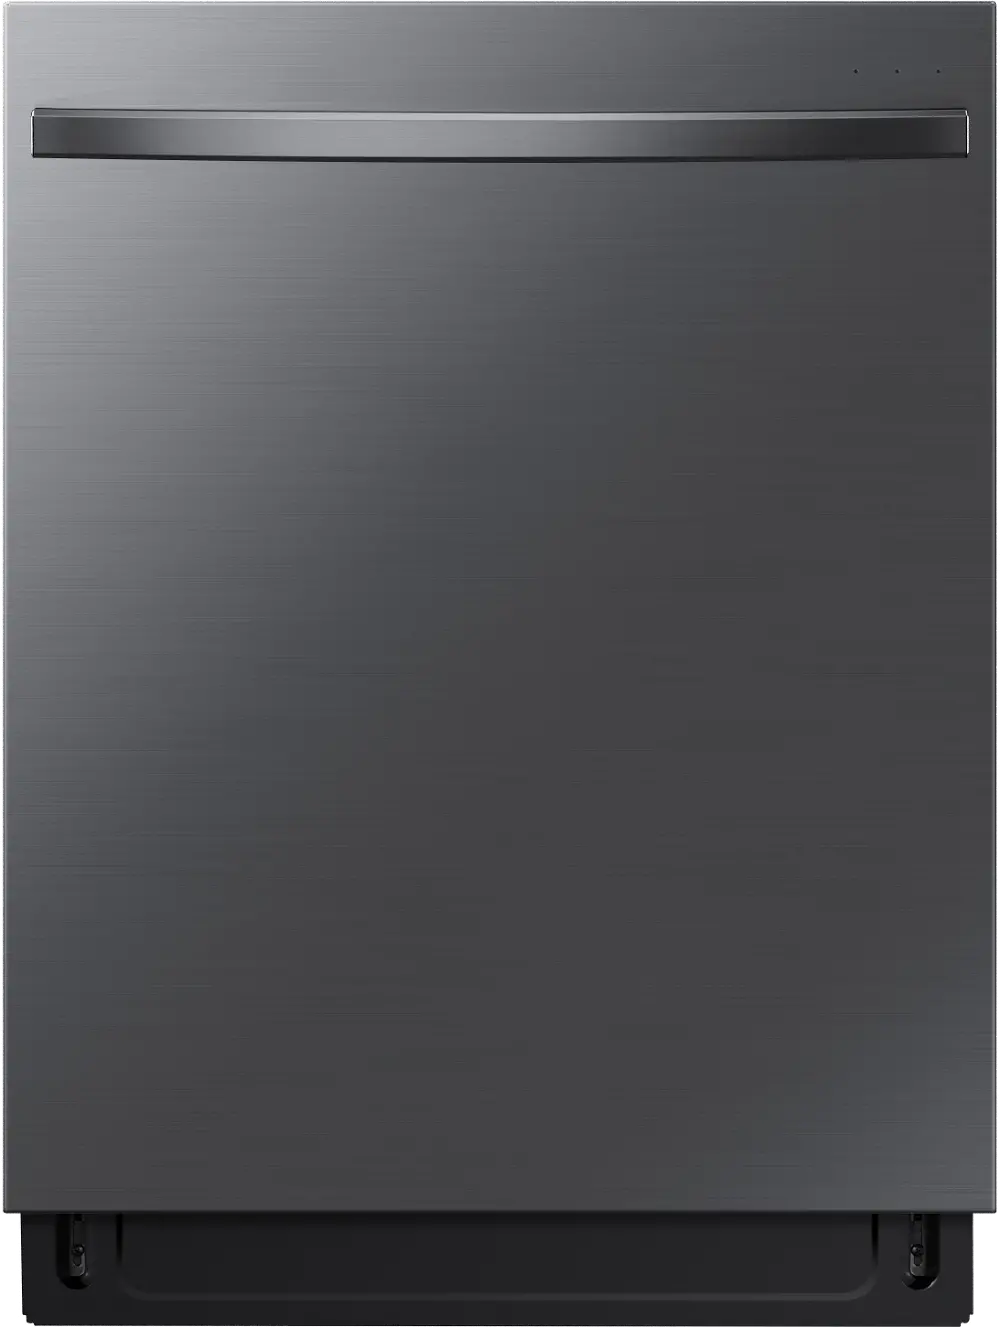 DW80B7071UG Samsung Top Control Dishwasher - Black Stainless Steel-1